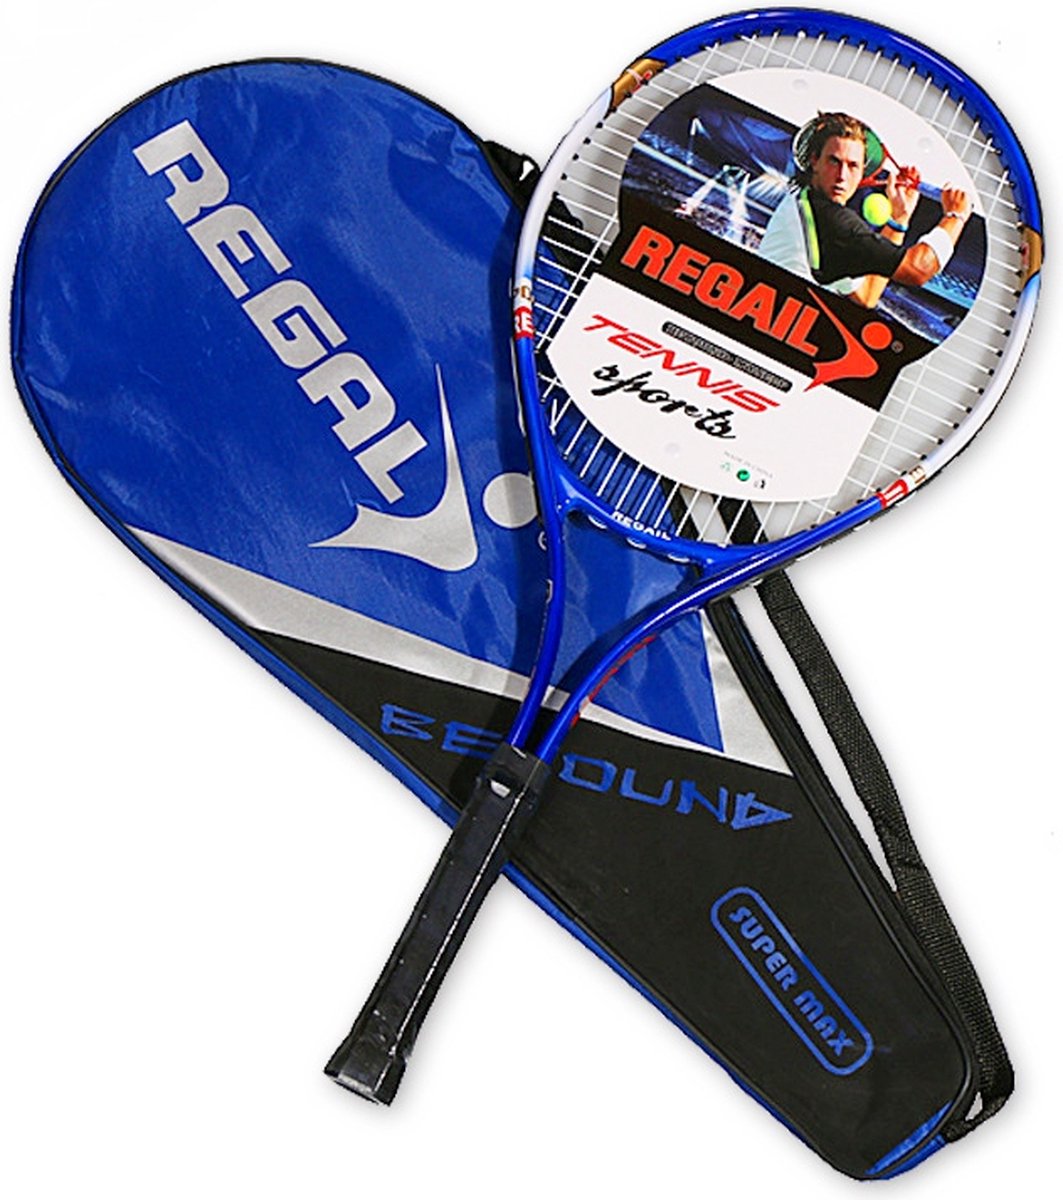 Pro-Care REGAIL Tennisracket Aluminium Frame 16/19 string - 310 gram - Professioneel - Unisex Rood/Zwart/Wit Maat L2 - Gratis Sporttas